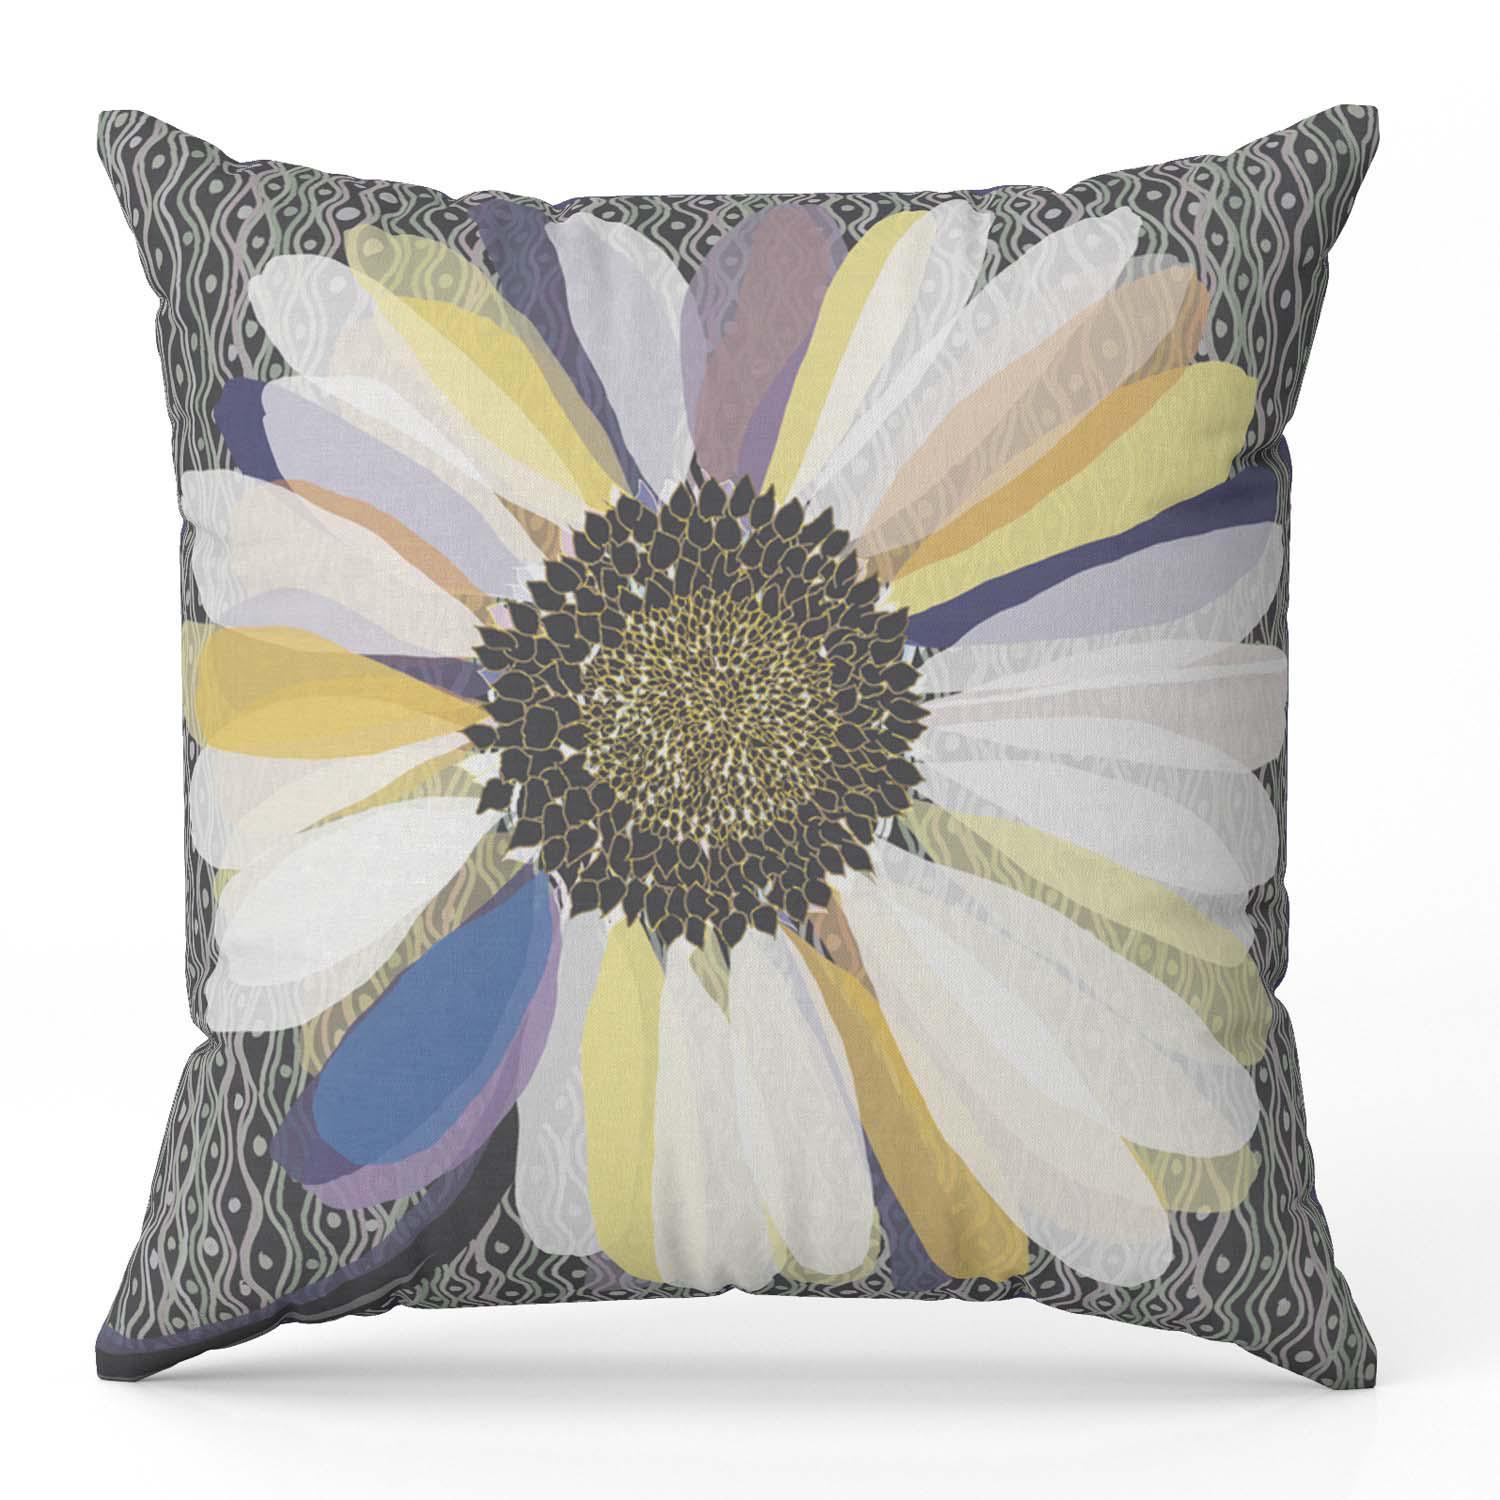 Patchwork Daisy - Funky Art Cushion - FOG - House Of Turnowsky Pillows - Handmade Cushions UK - WeLoveCushions